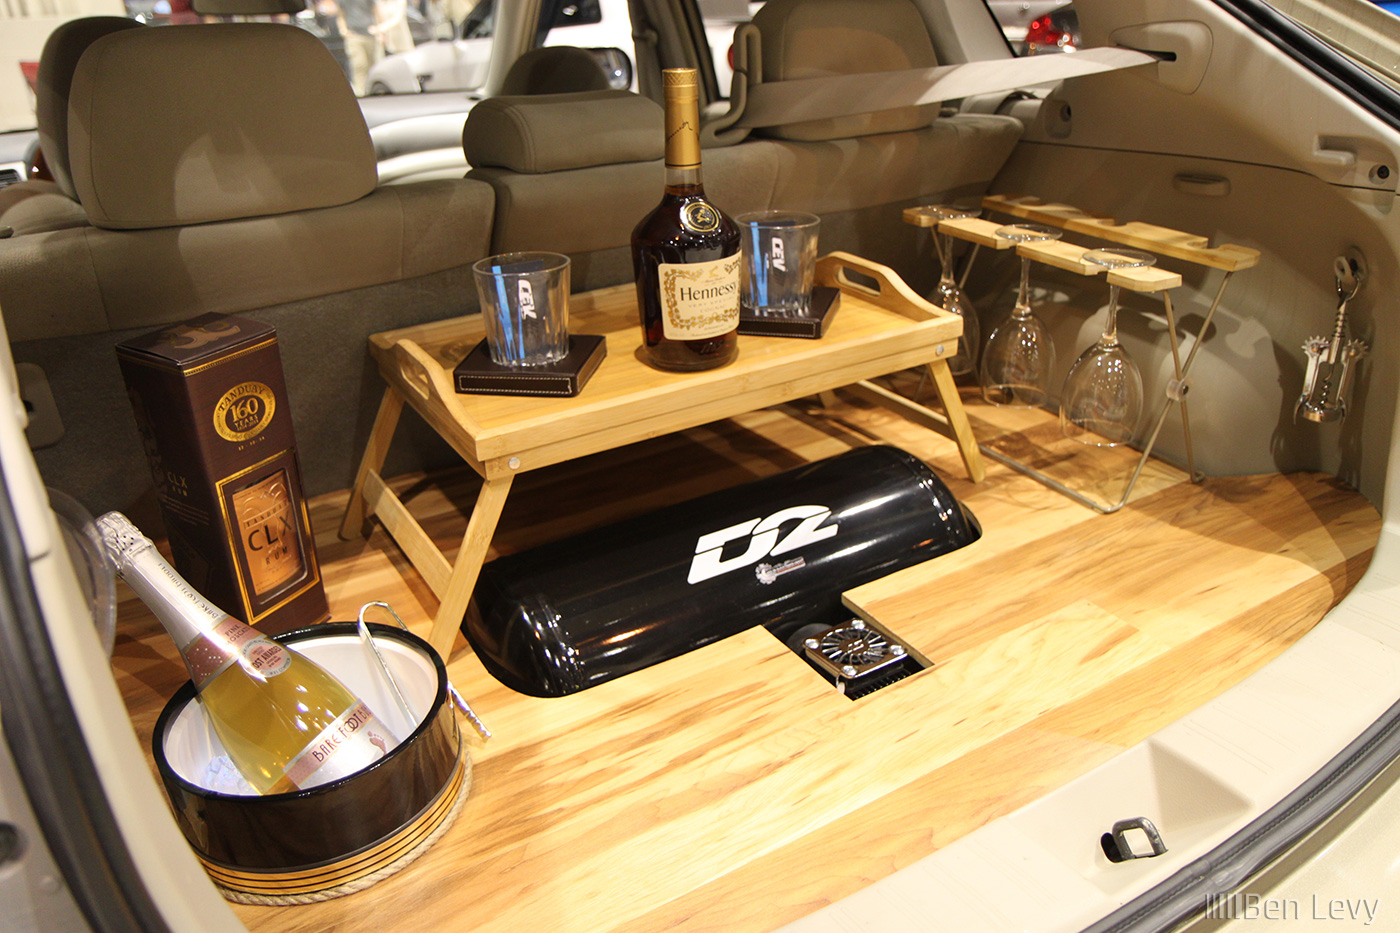 VIP setup in the trunk of a bagged Subaru Impreza